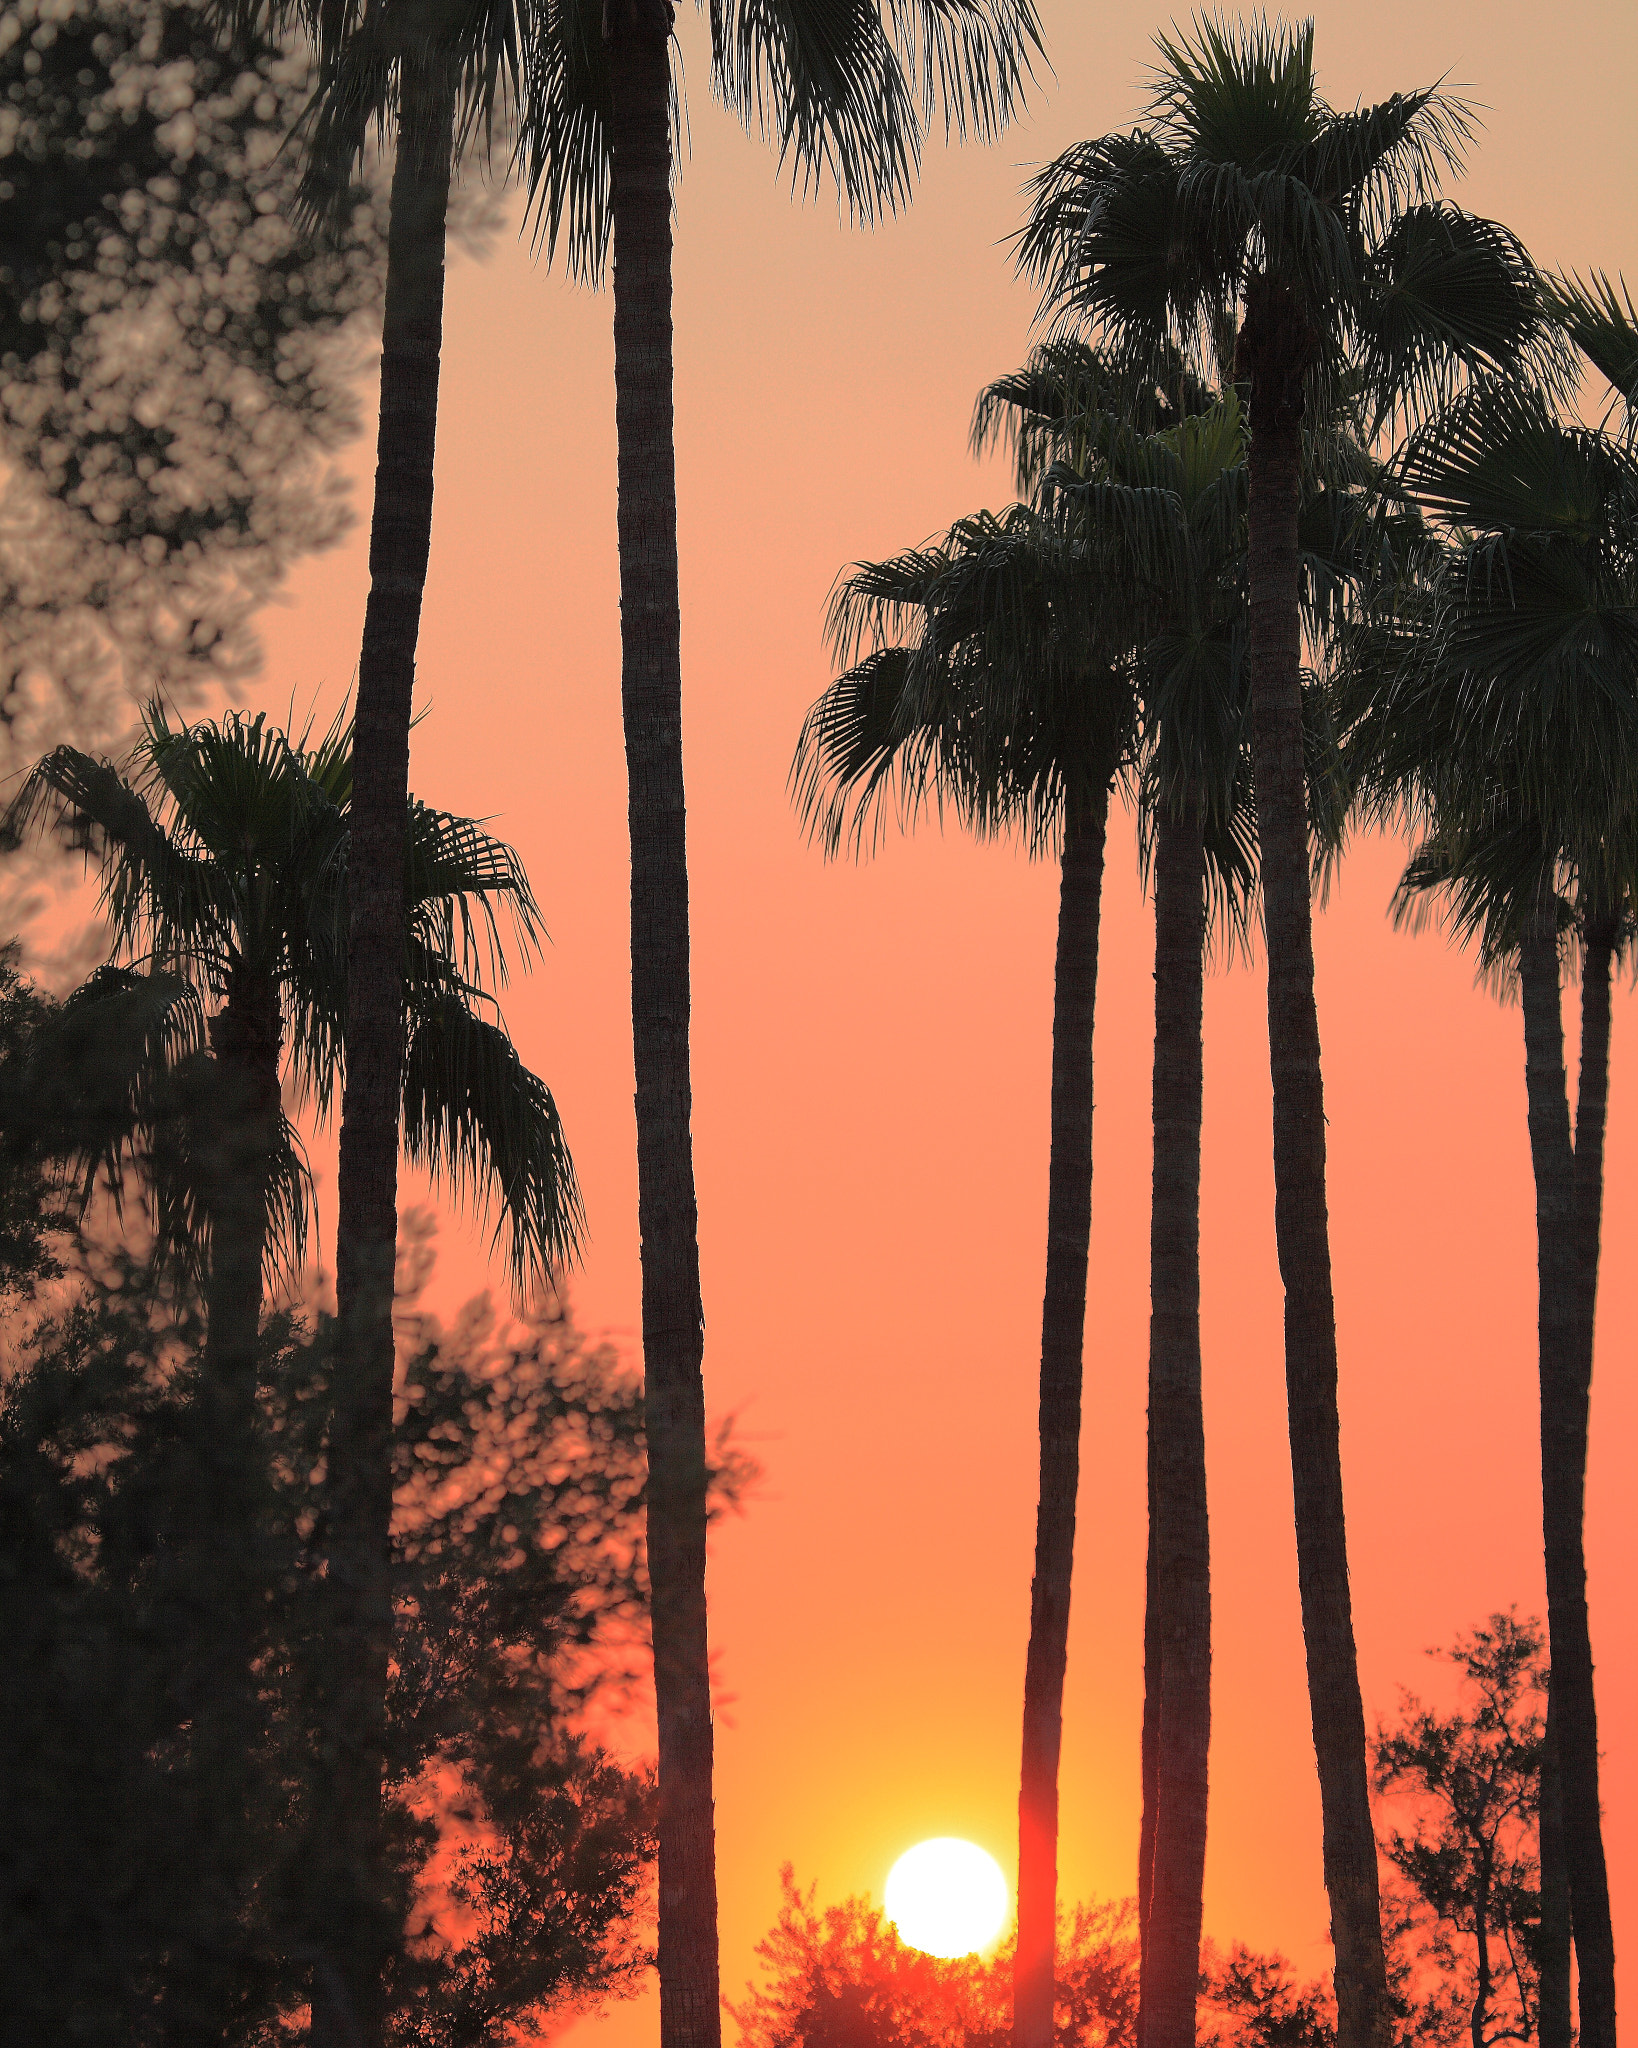 Sunrise in Phoenix, Arizona